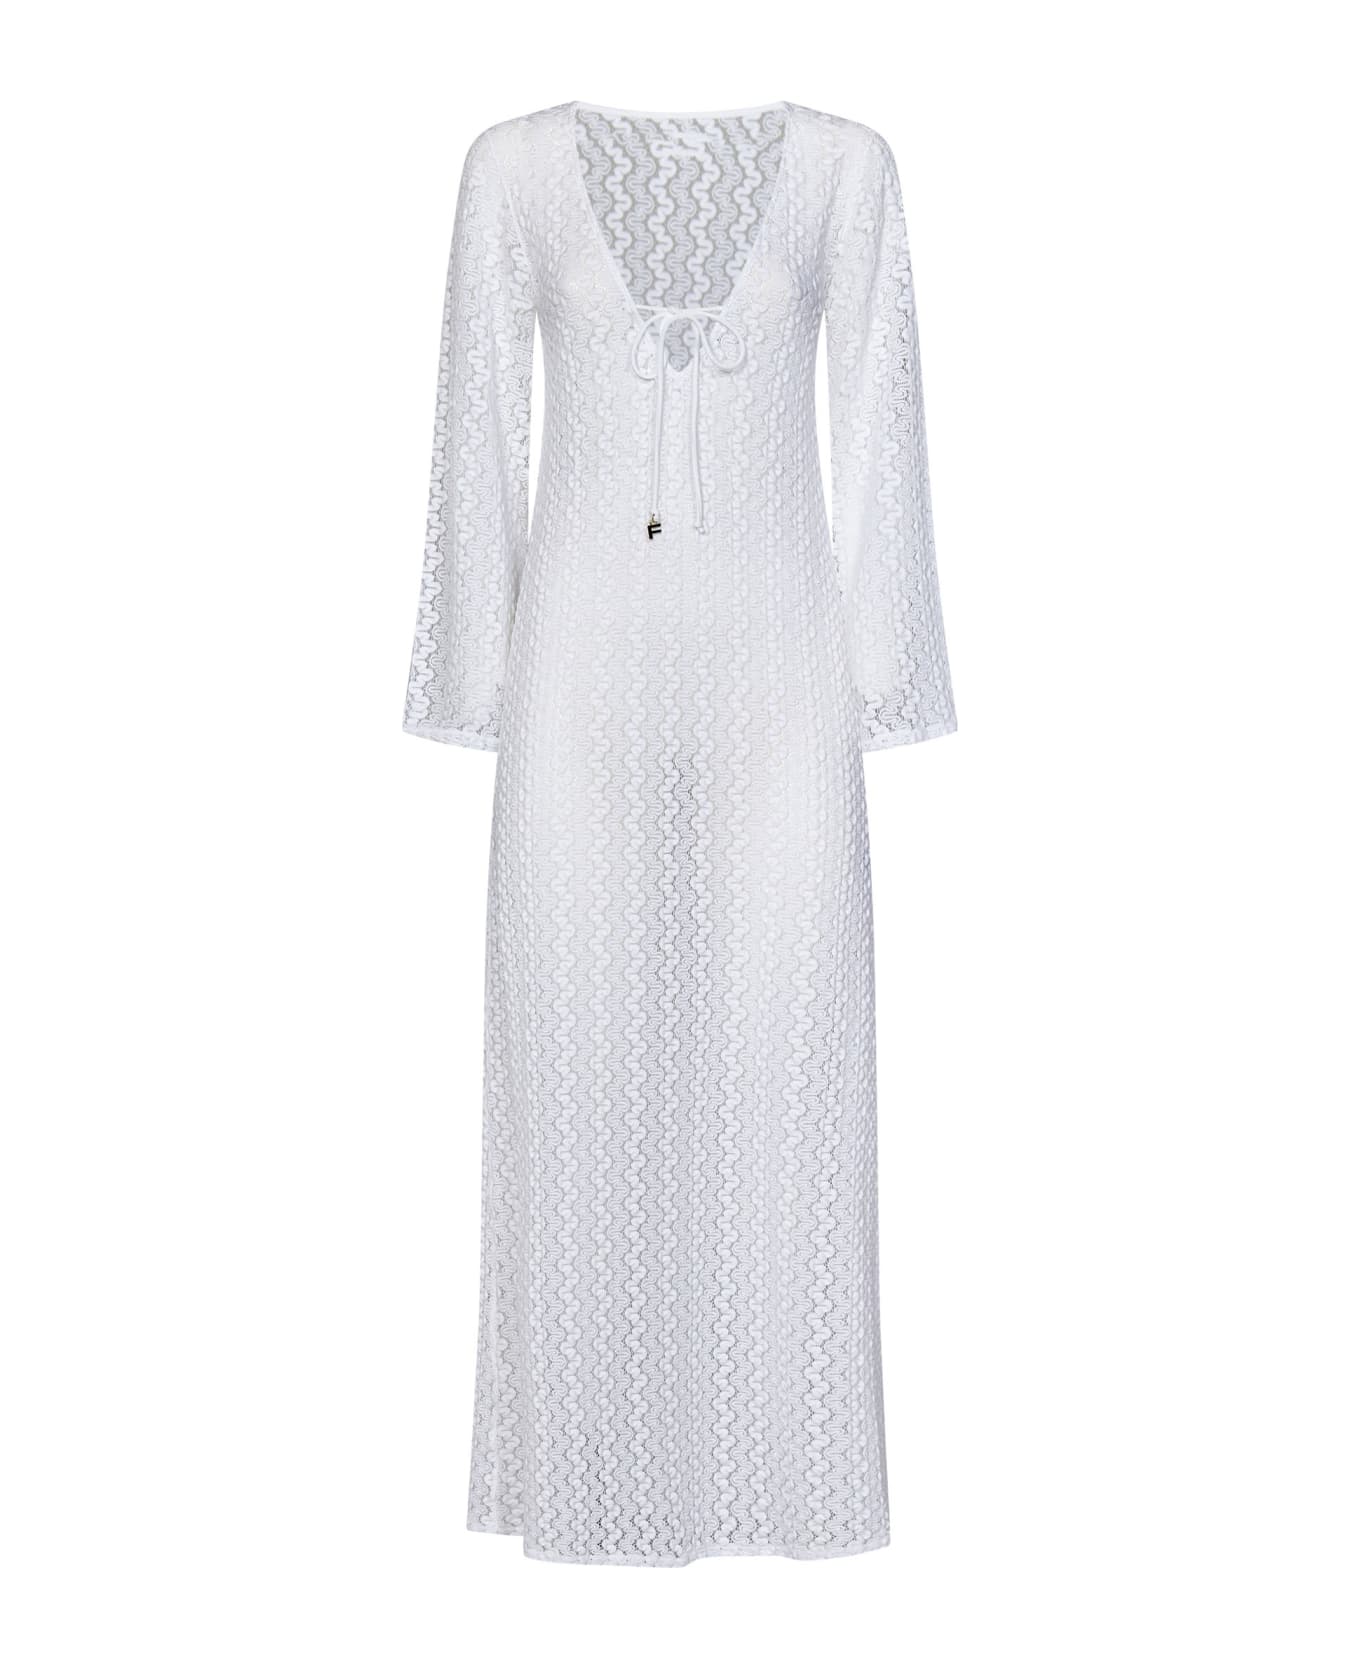 Fisico - Cristina Ferrari Fisico Dress - White